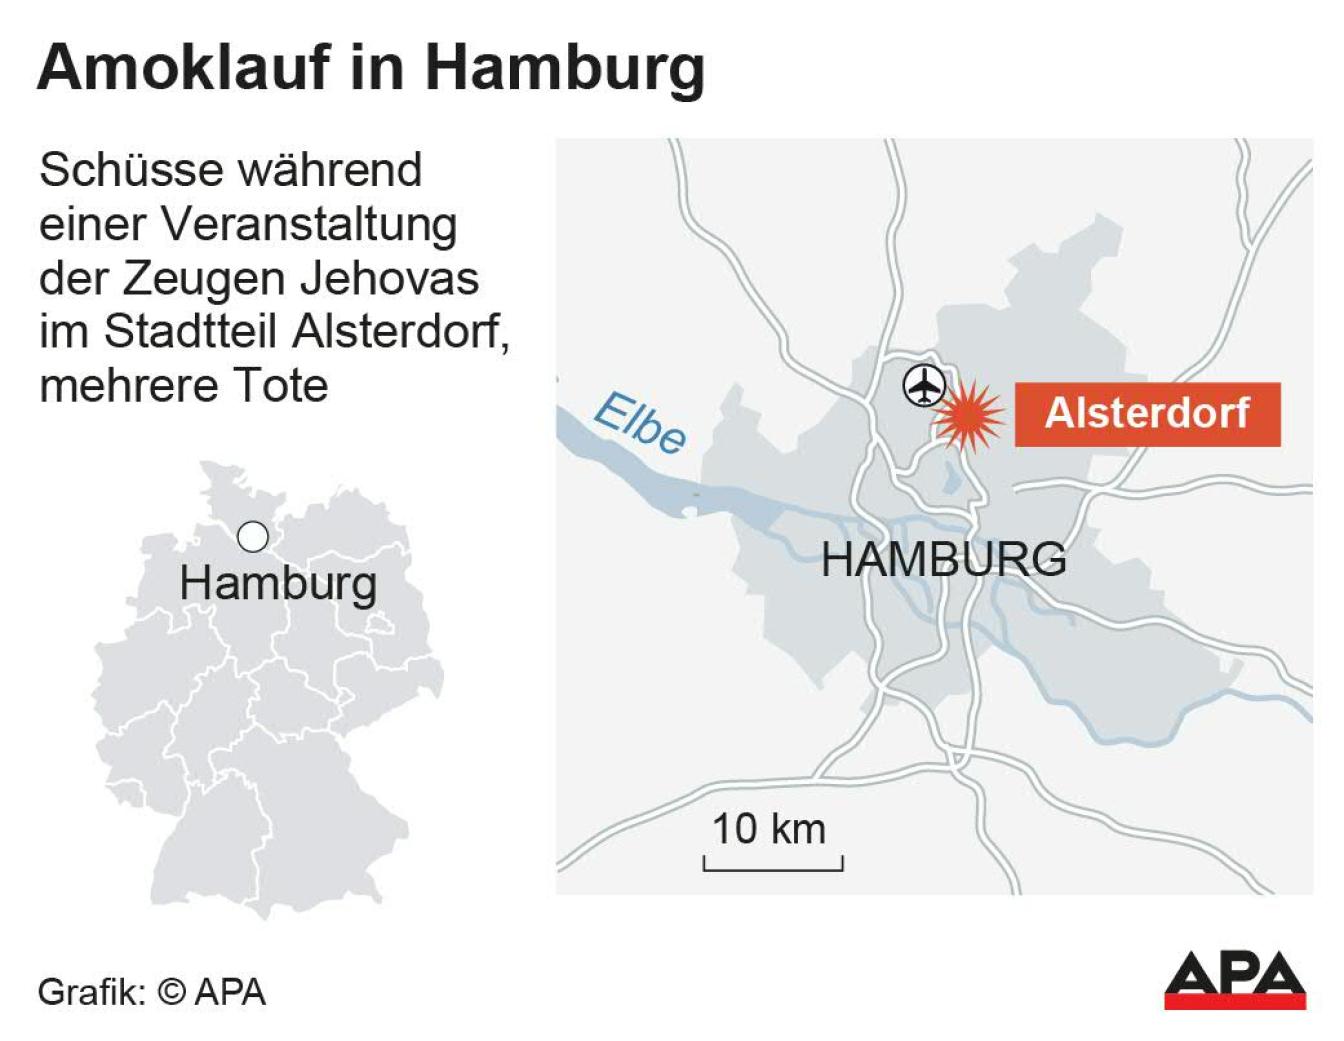 Amoklauf in Hamburg